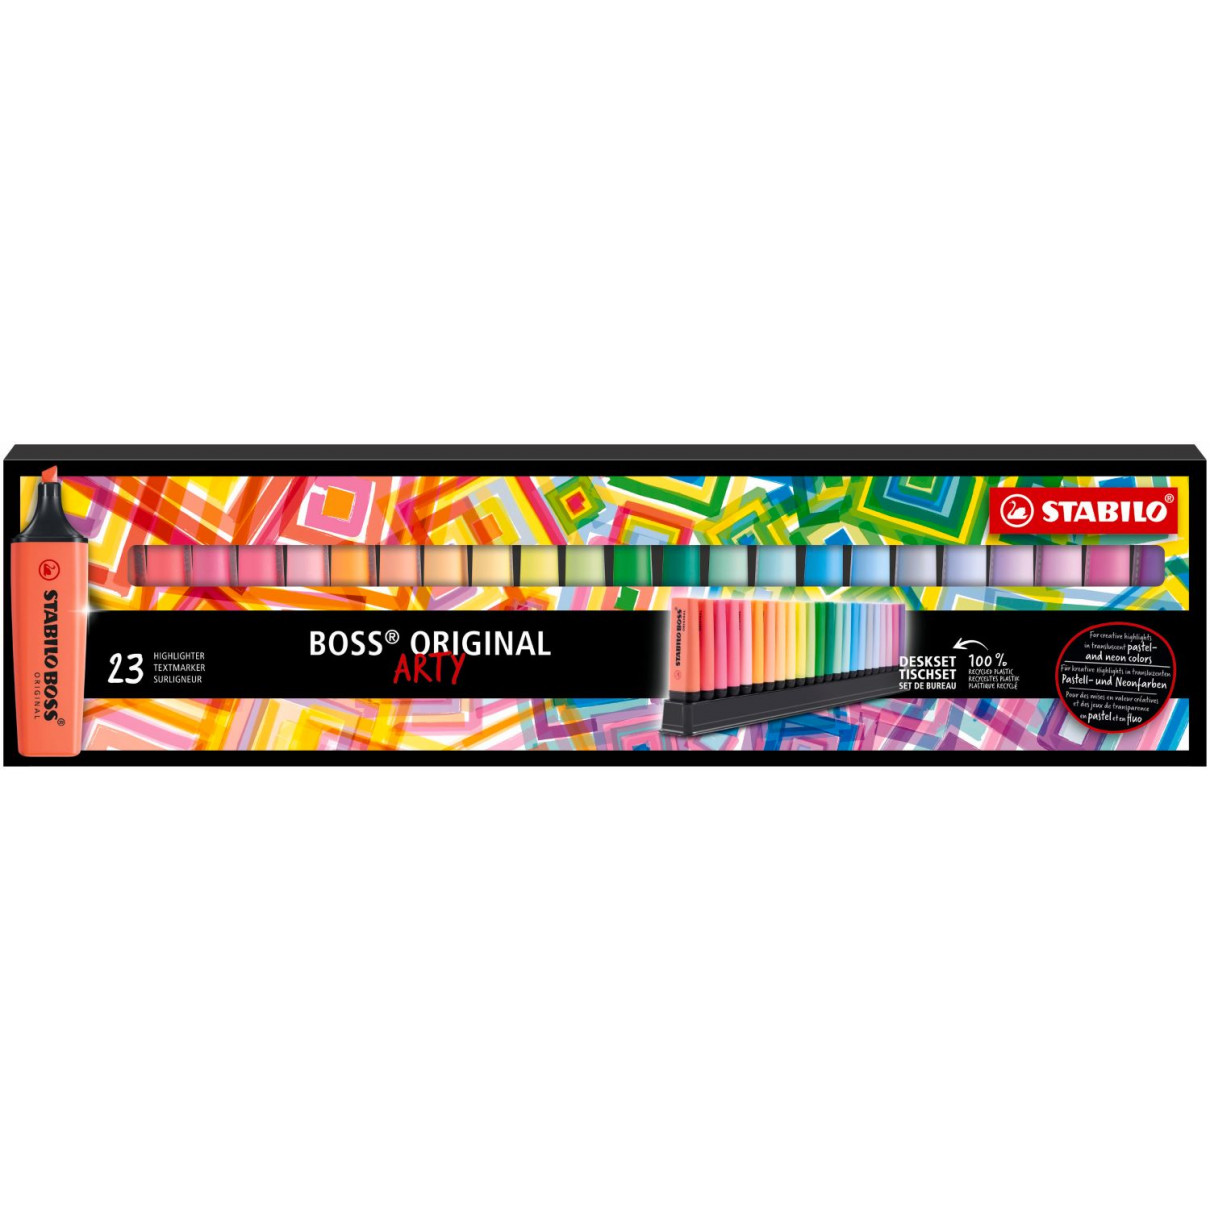 Stabilo Boss pastel original (blíster 6 colores)